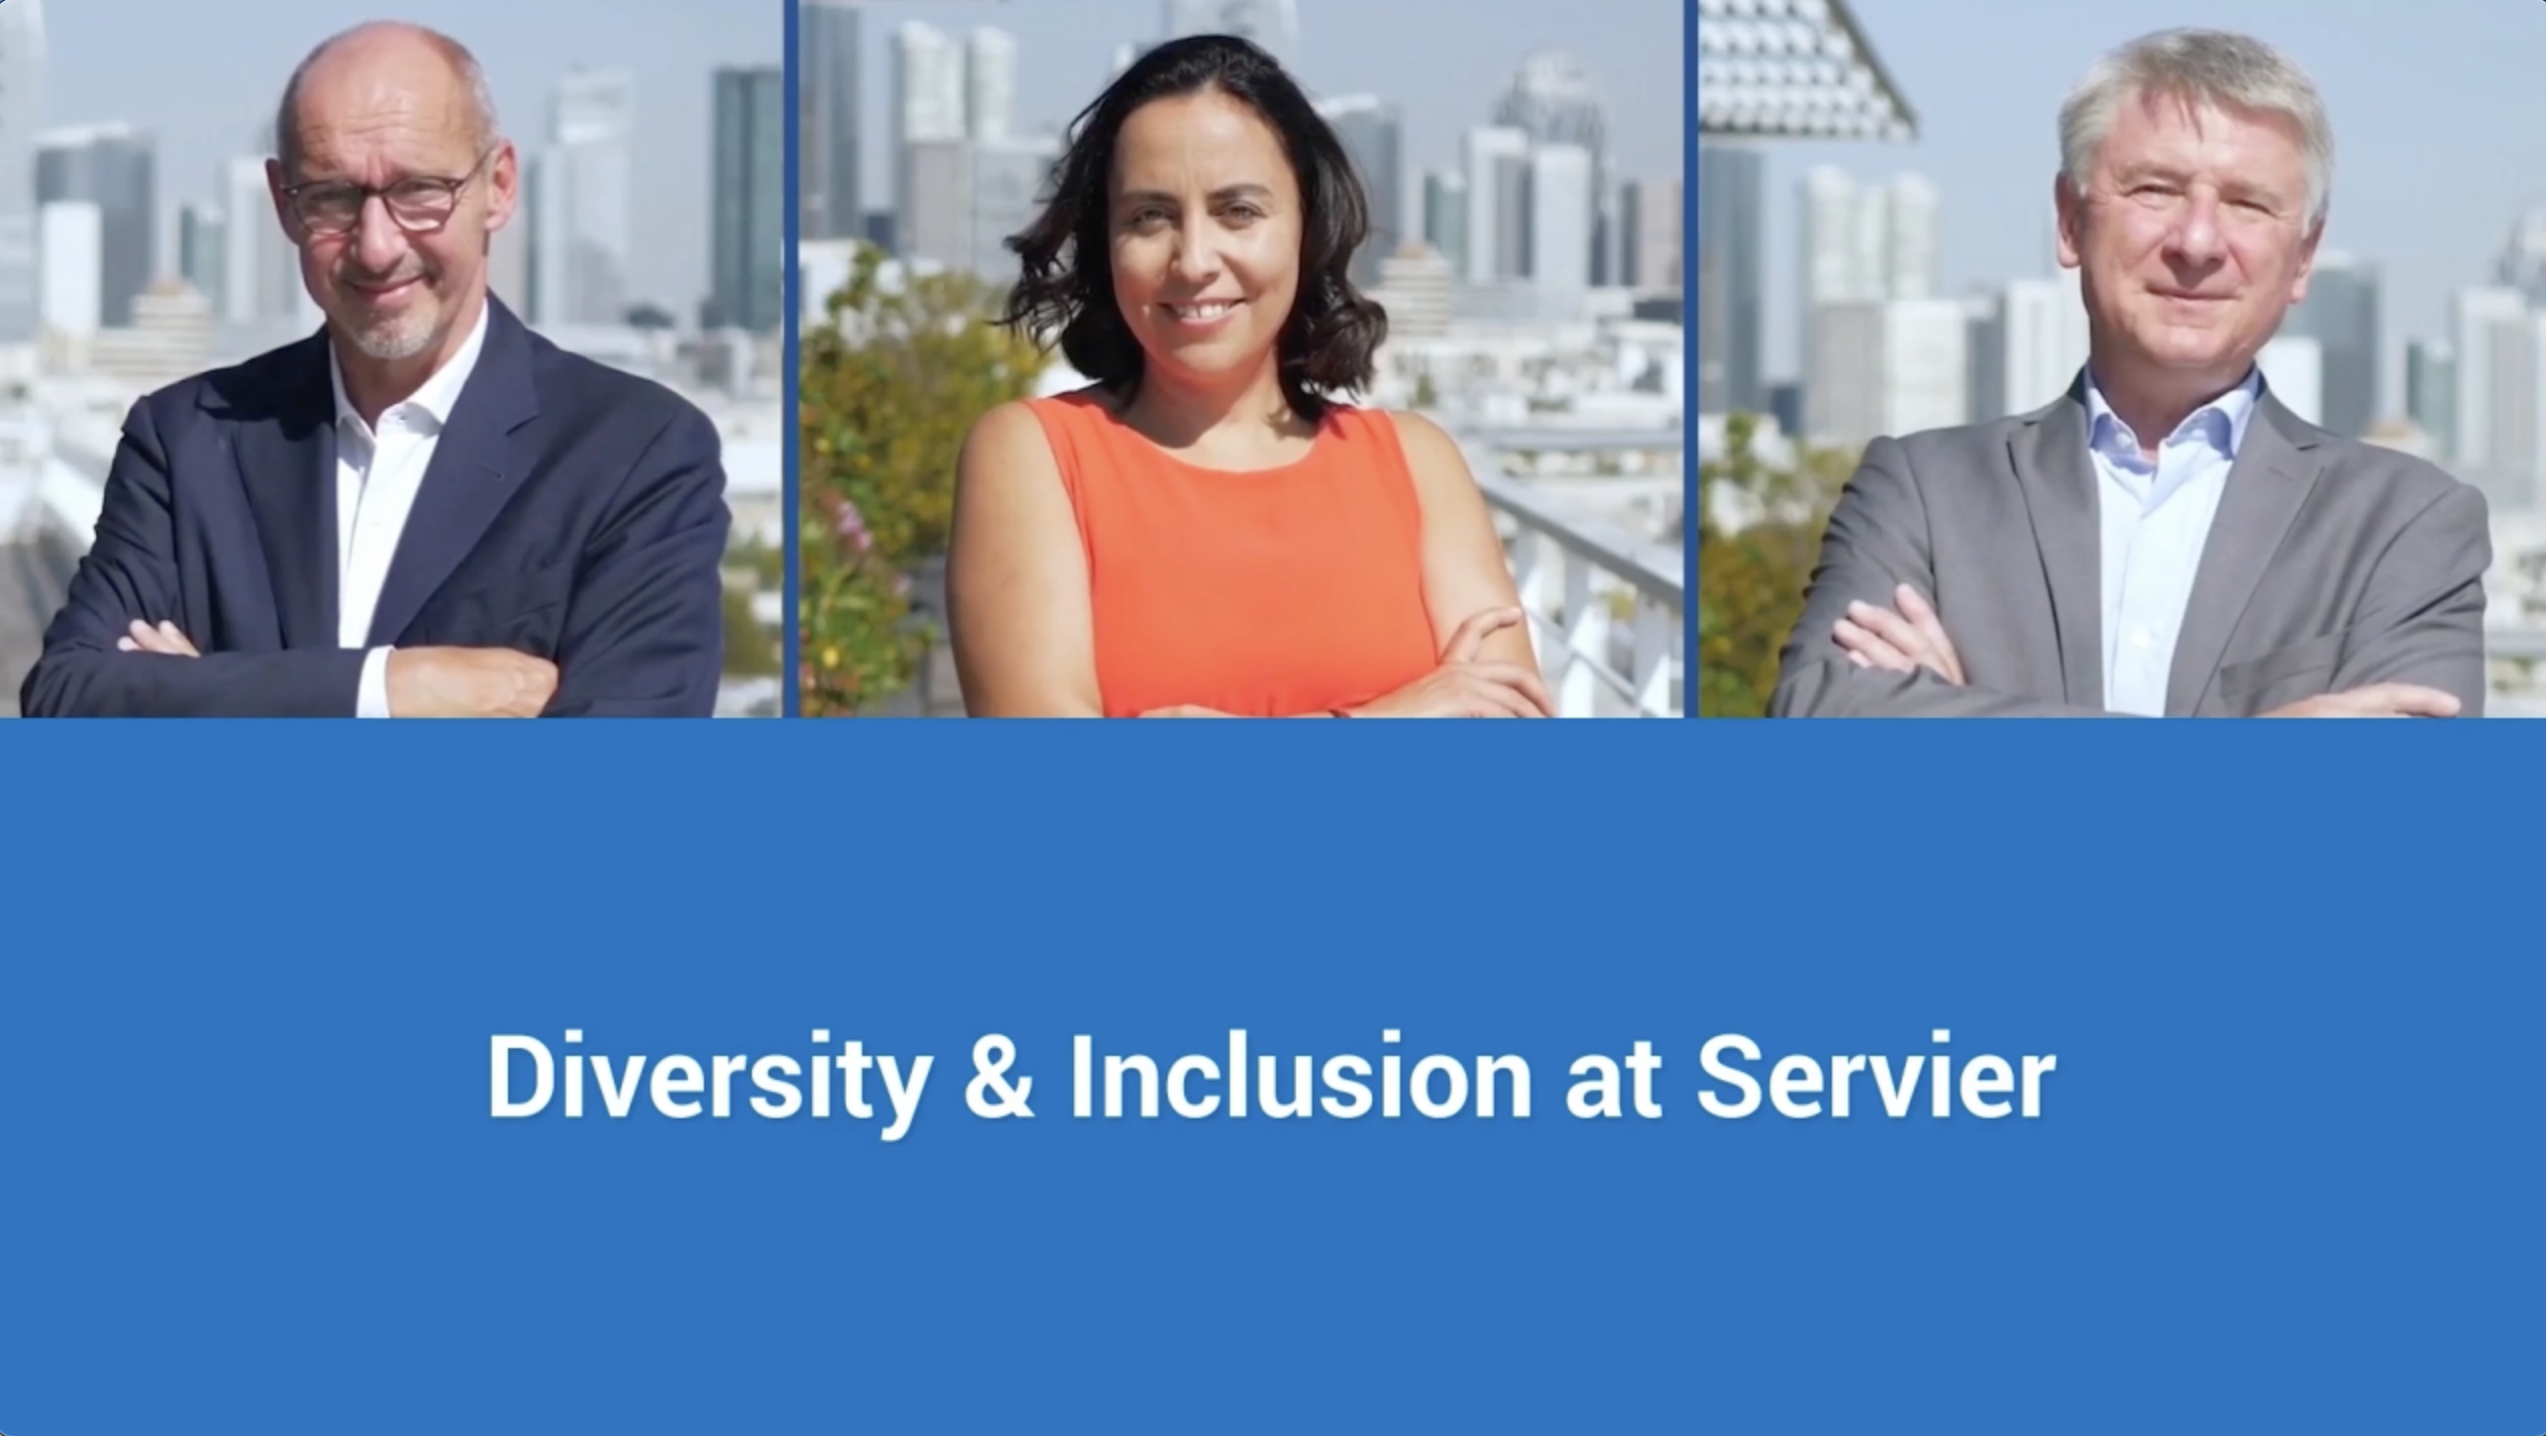 #ServierDiversity - Group program for diversity and inclusion